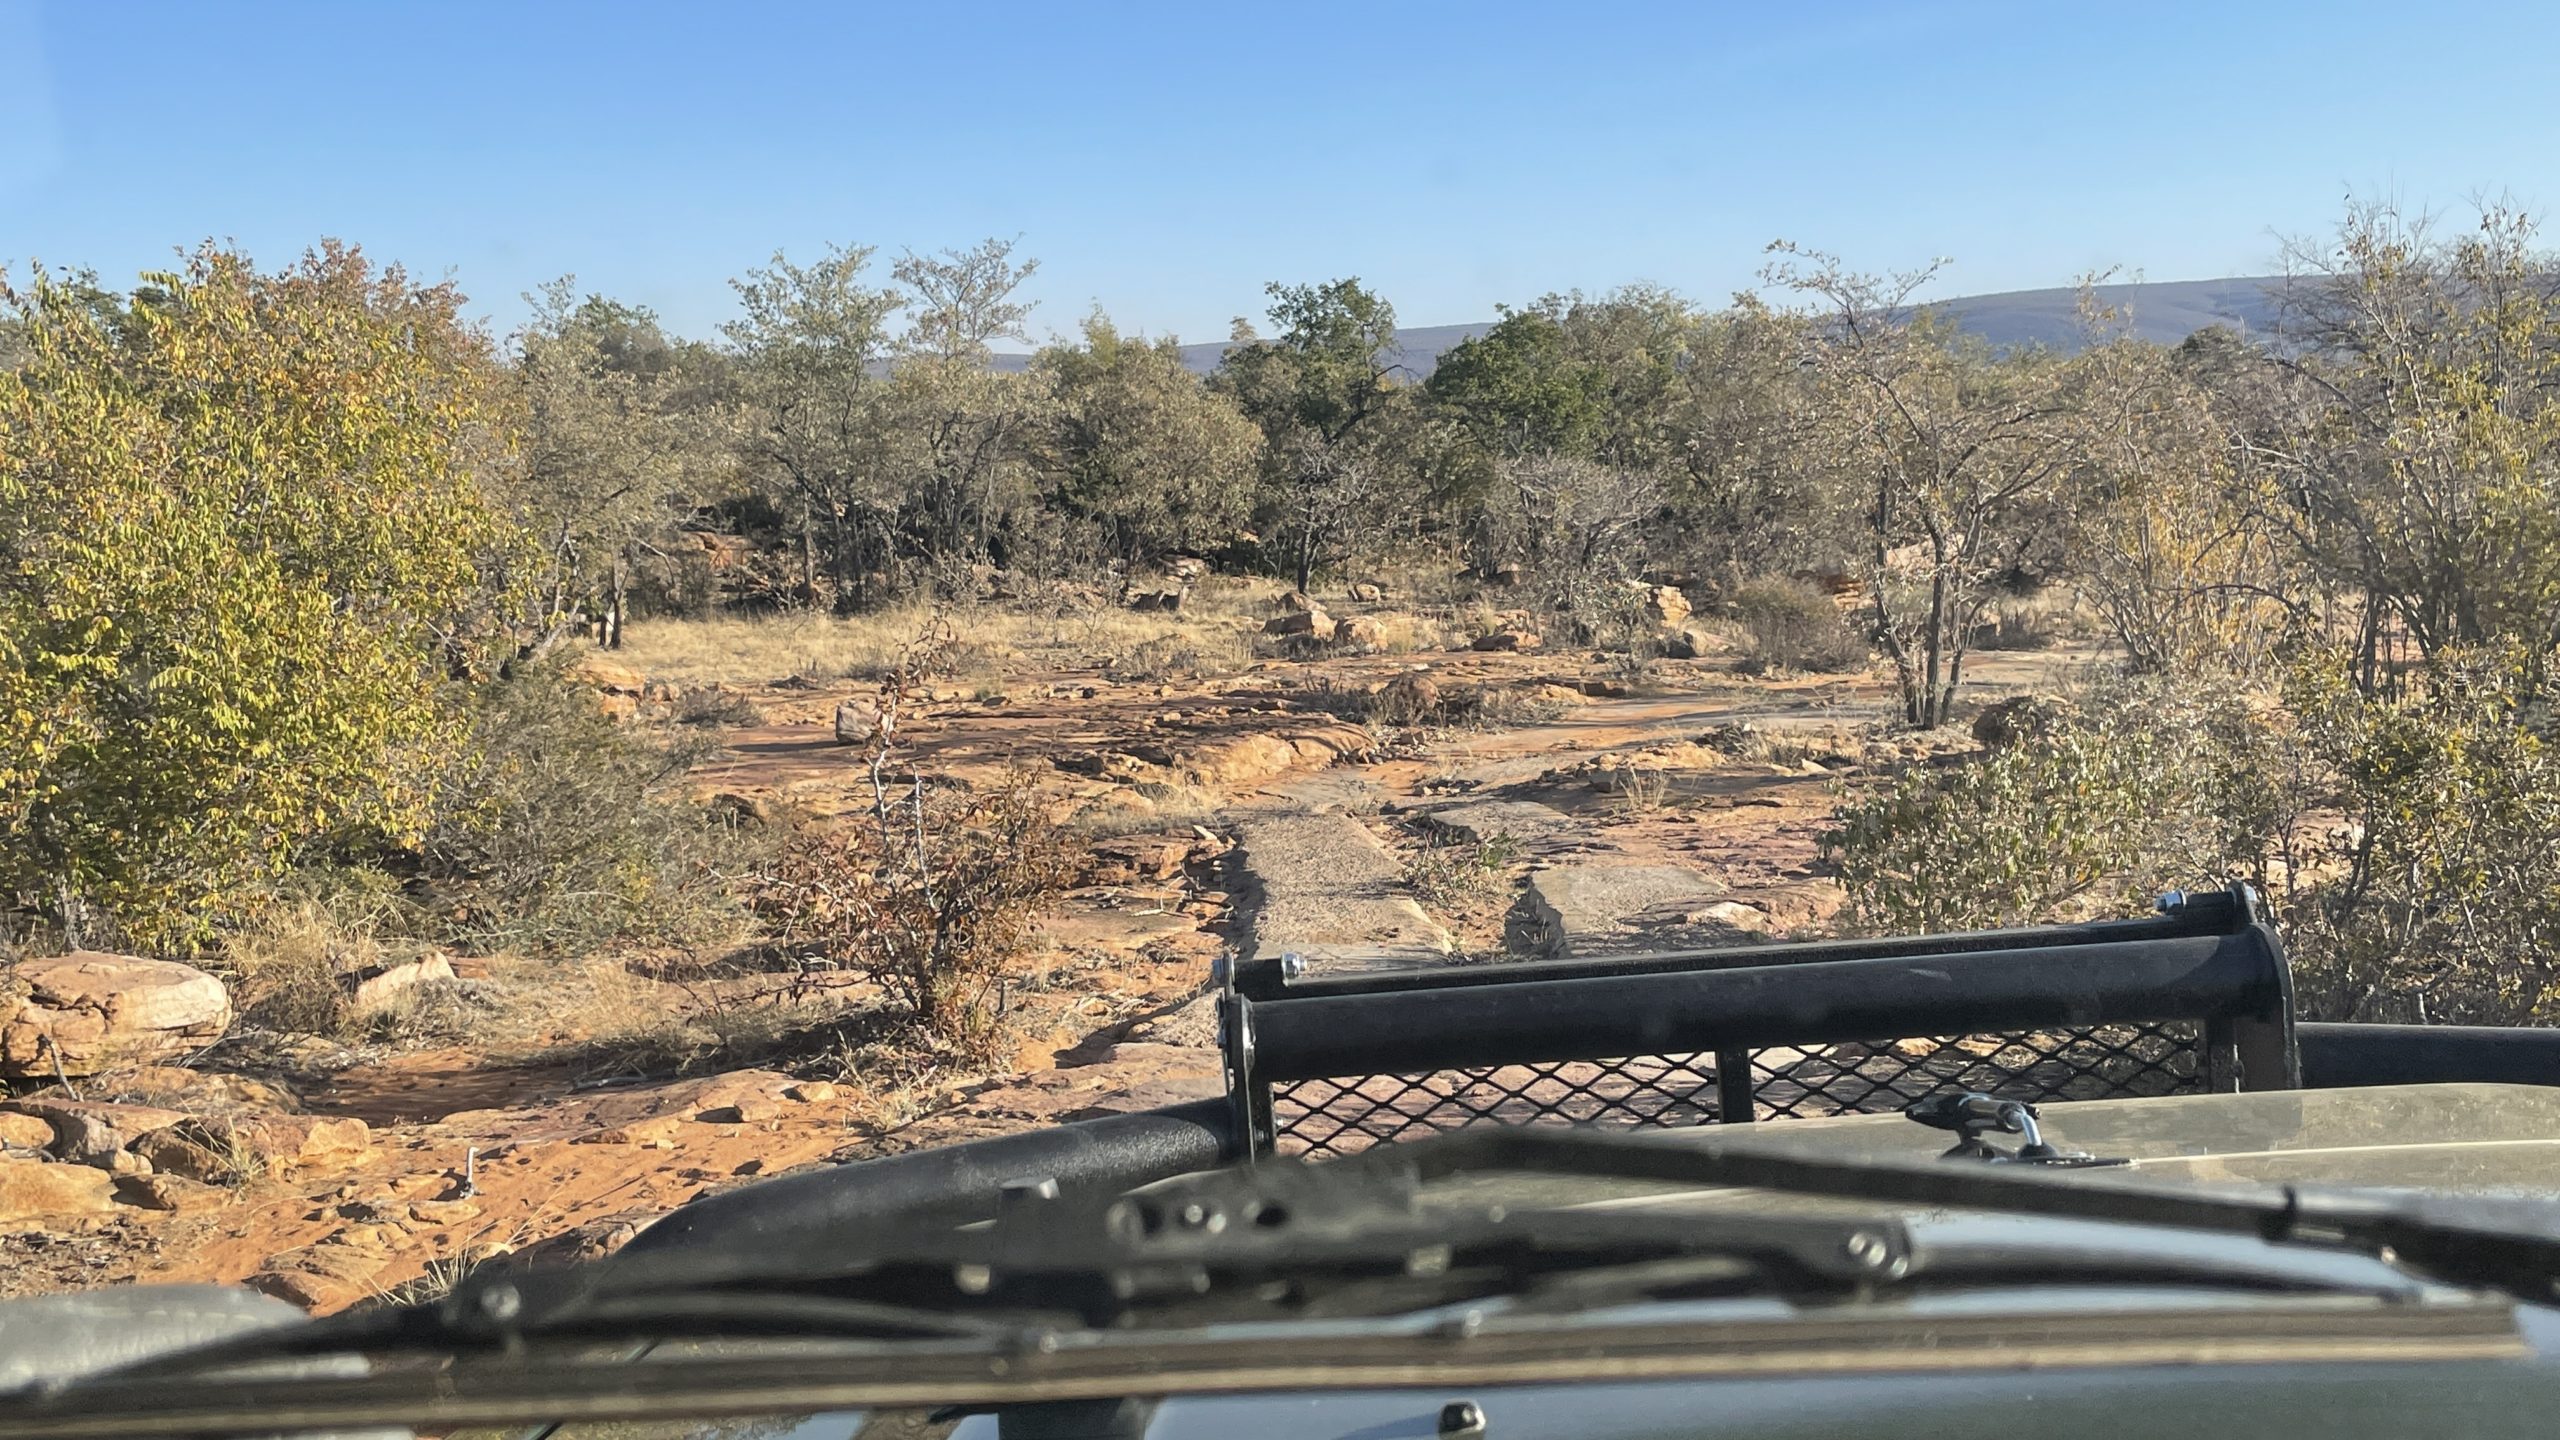 Sabatana Private Reserve Safari Open Air Safari Vehicle Offroad over Rocks Point Hacks by Daniel Sciberras